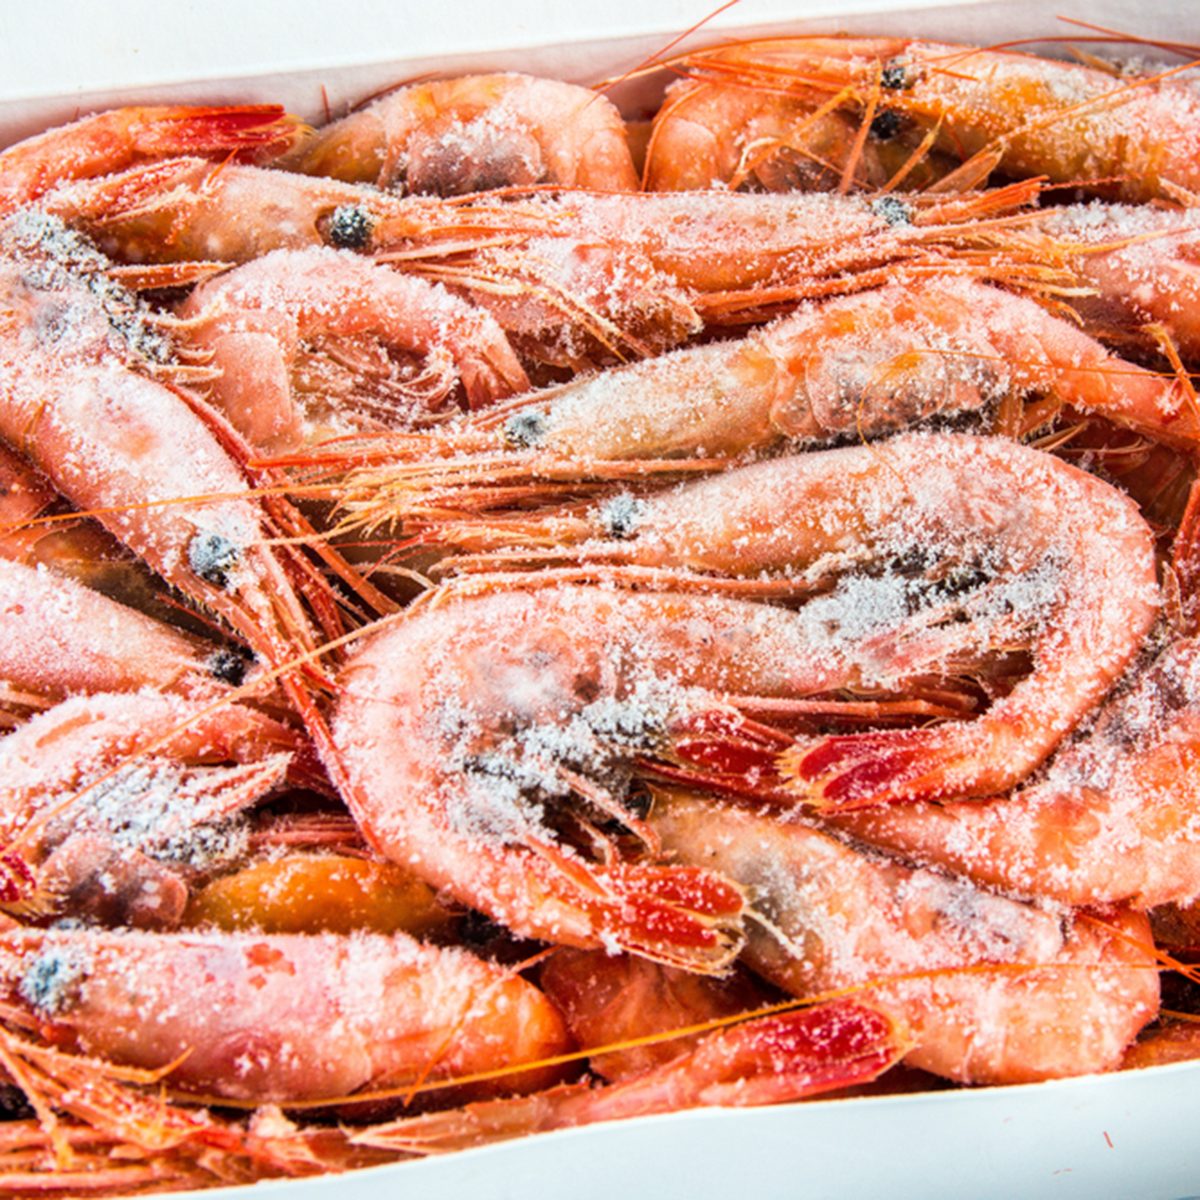 frozen shrimp in a box